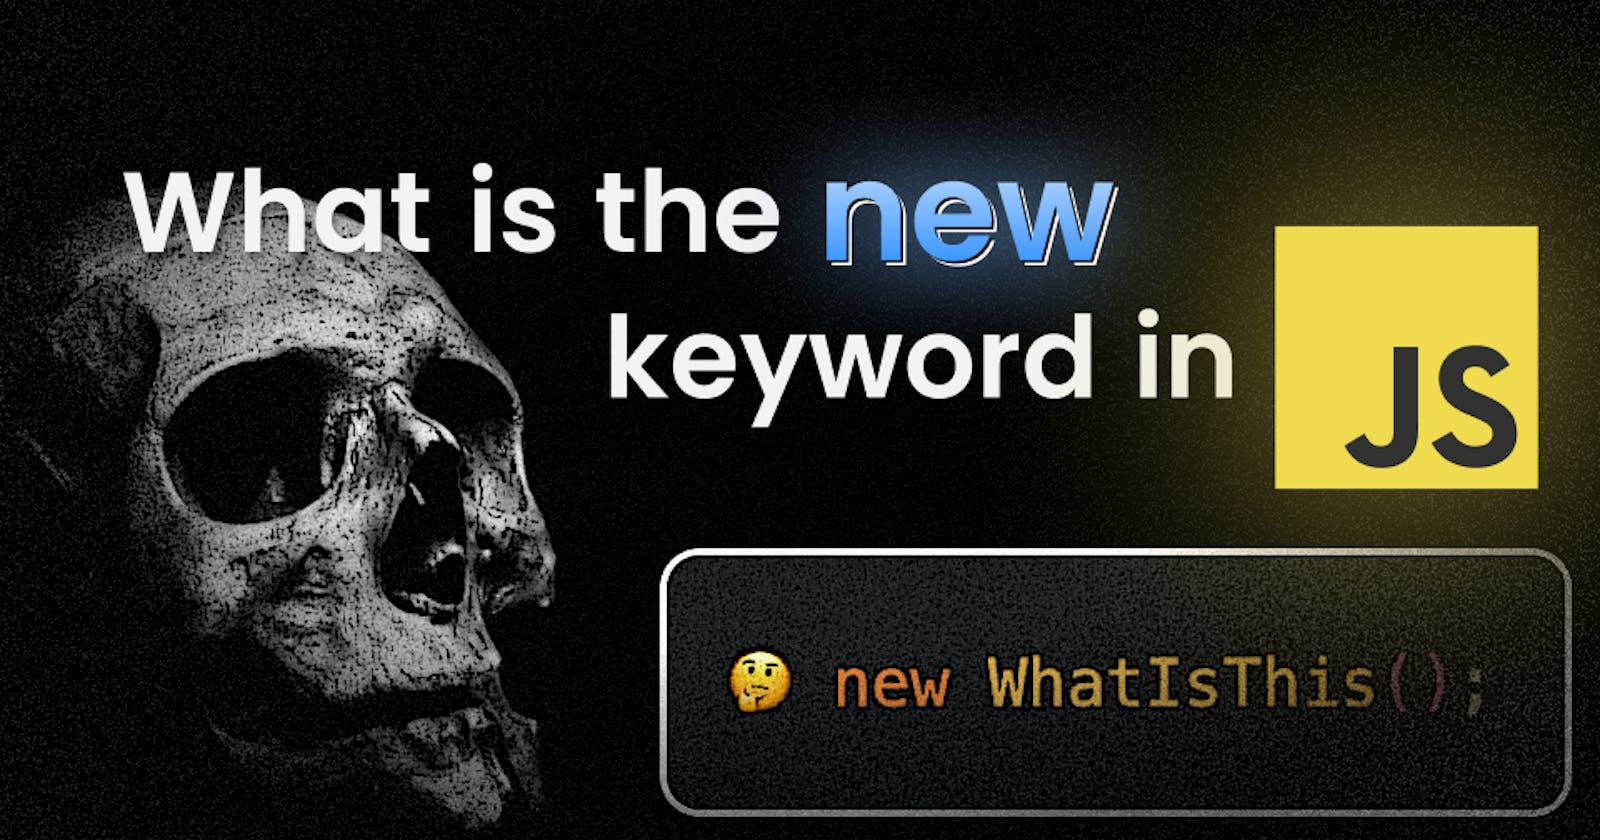 The new Keyword in JavaScript